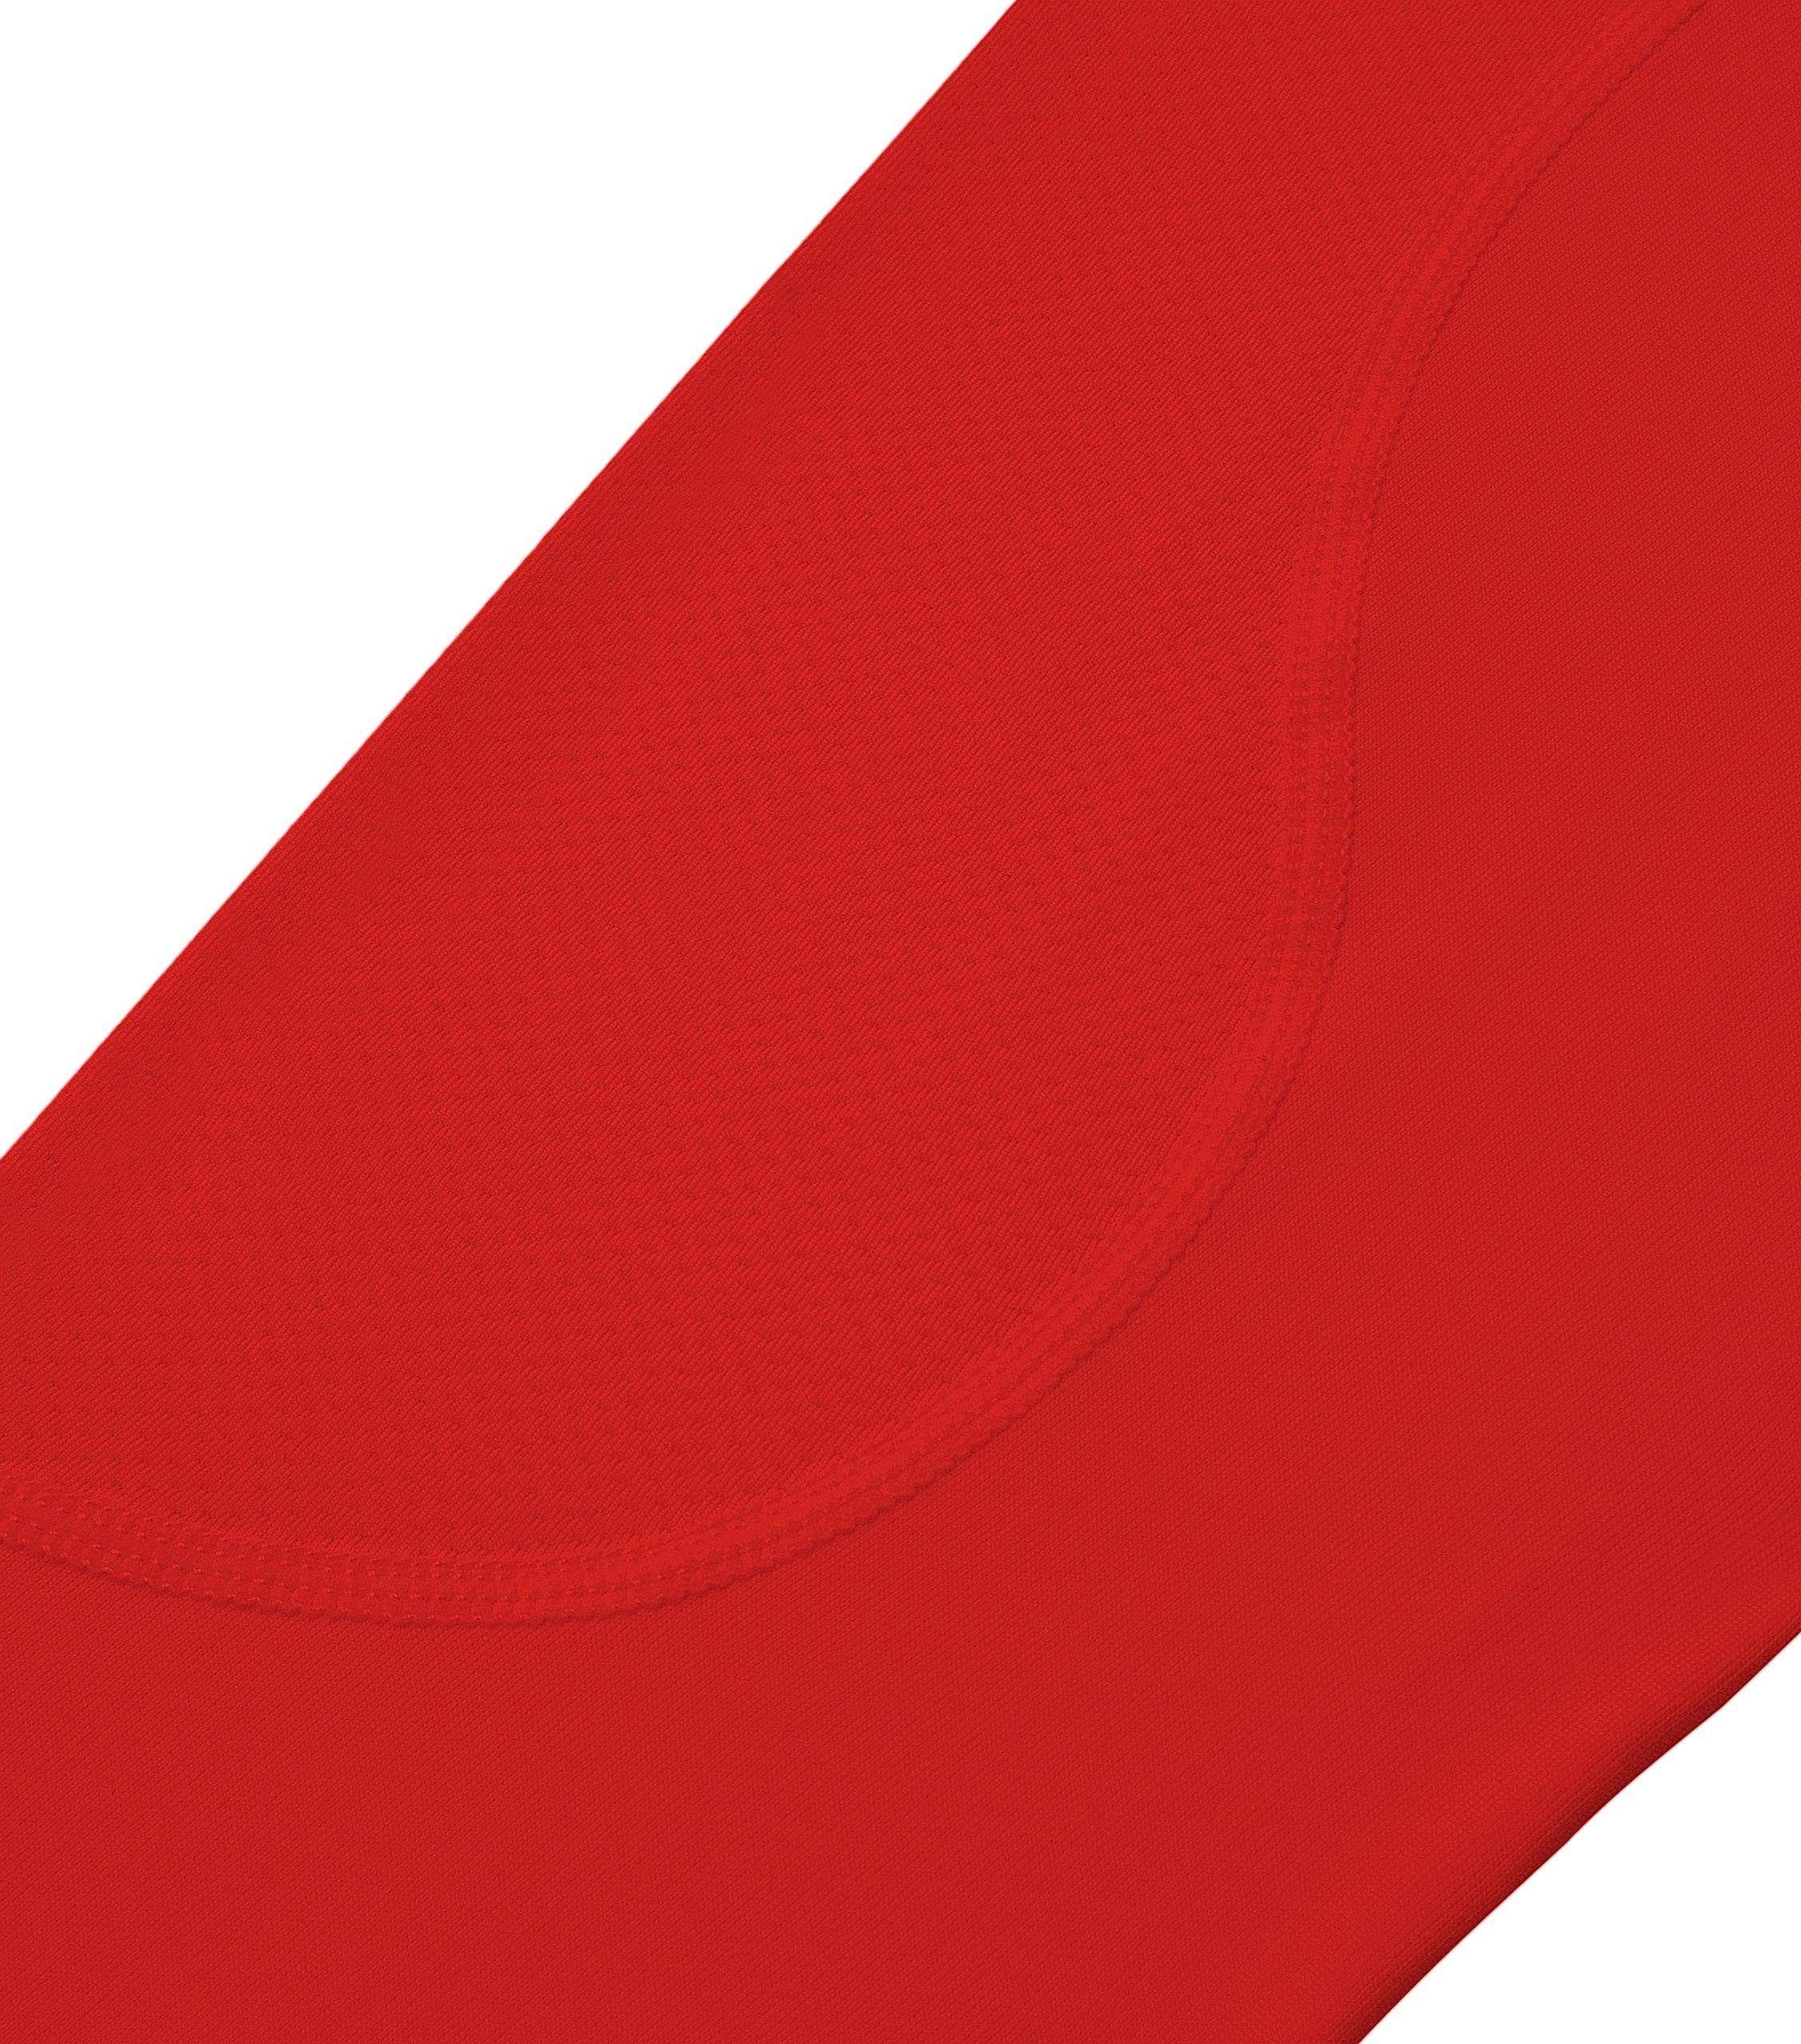 Atmungsaktiv TCA Herren & TCA Langarmshirt Rot Trocknend Kompressionsshirt - Schnell -